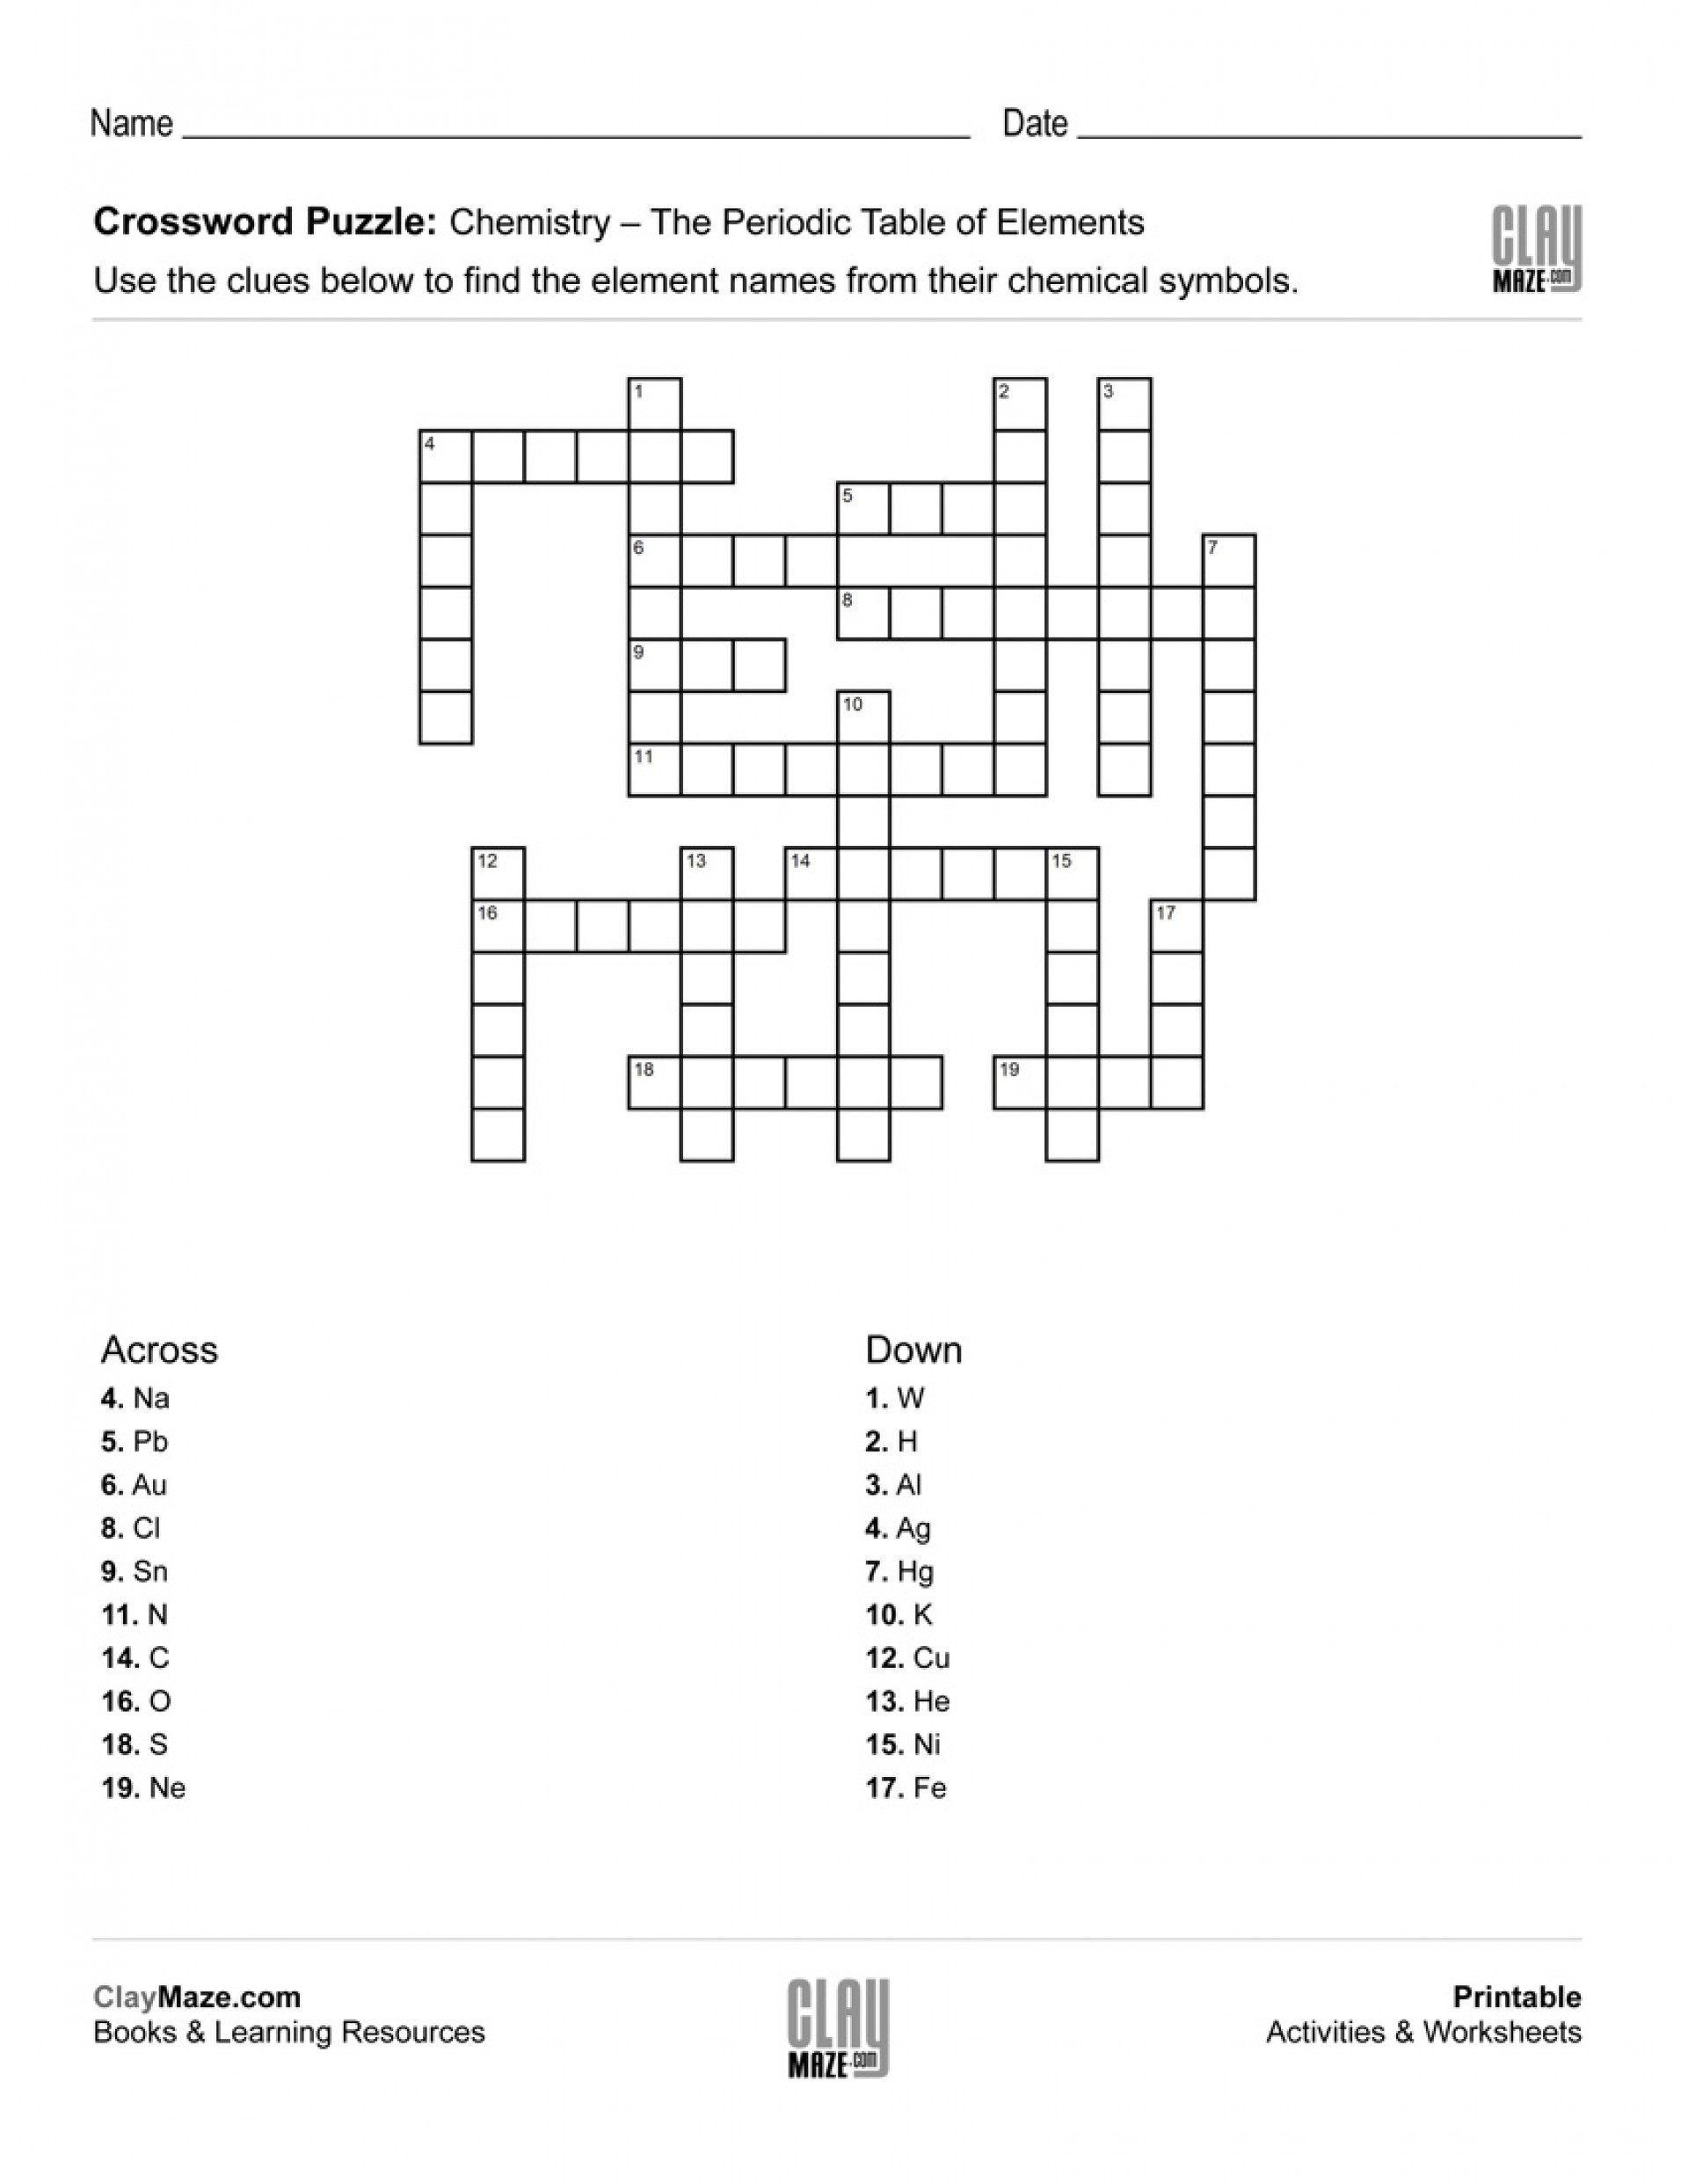 Periodic Table Crossword Puzzle Pdf New Chemistry Periodic Table - Printable Crossword Puzzle Book Pdf